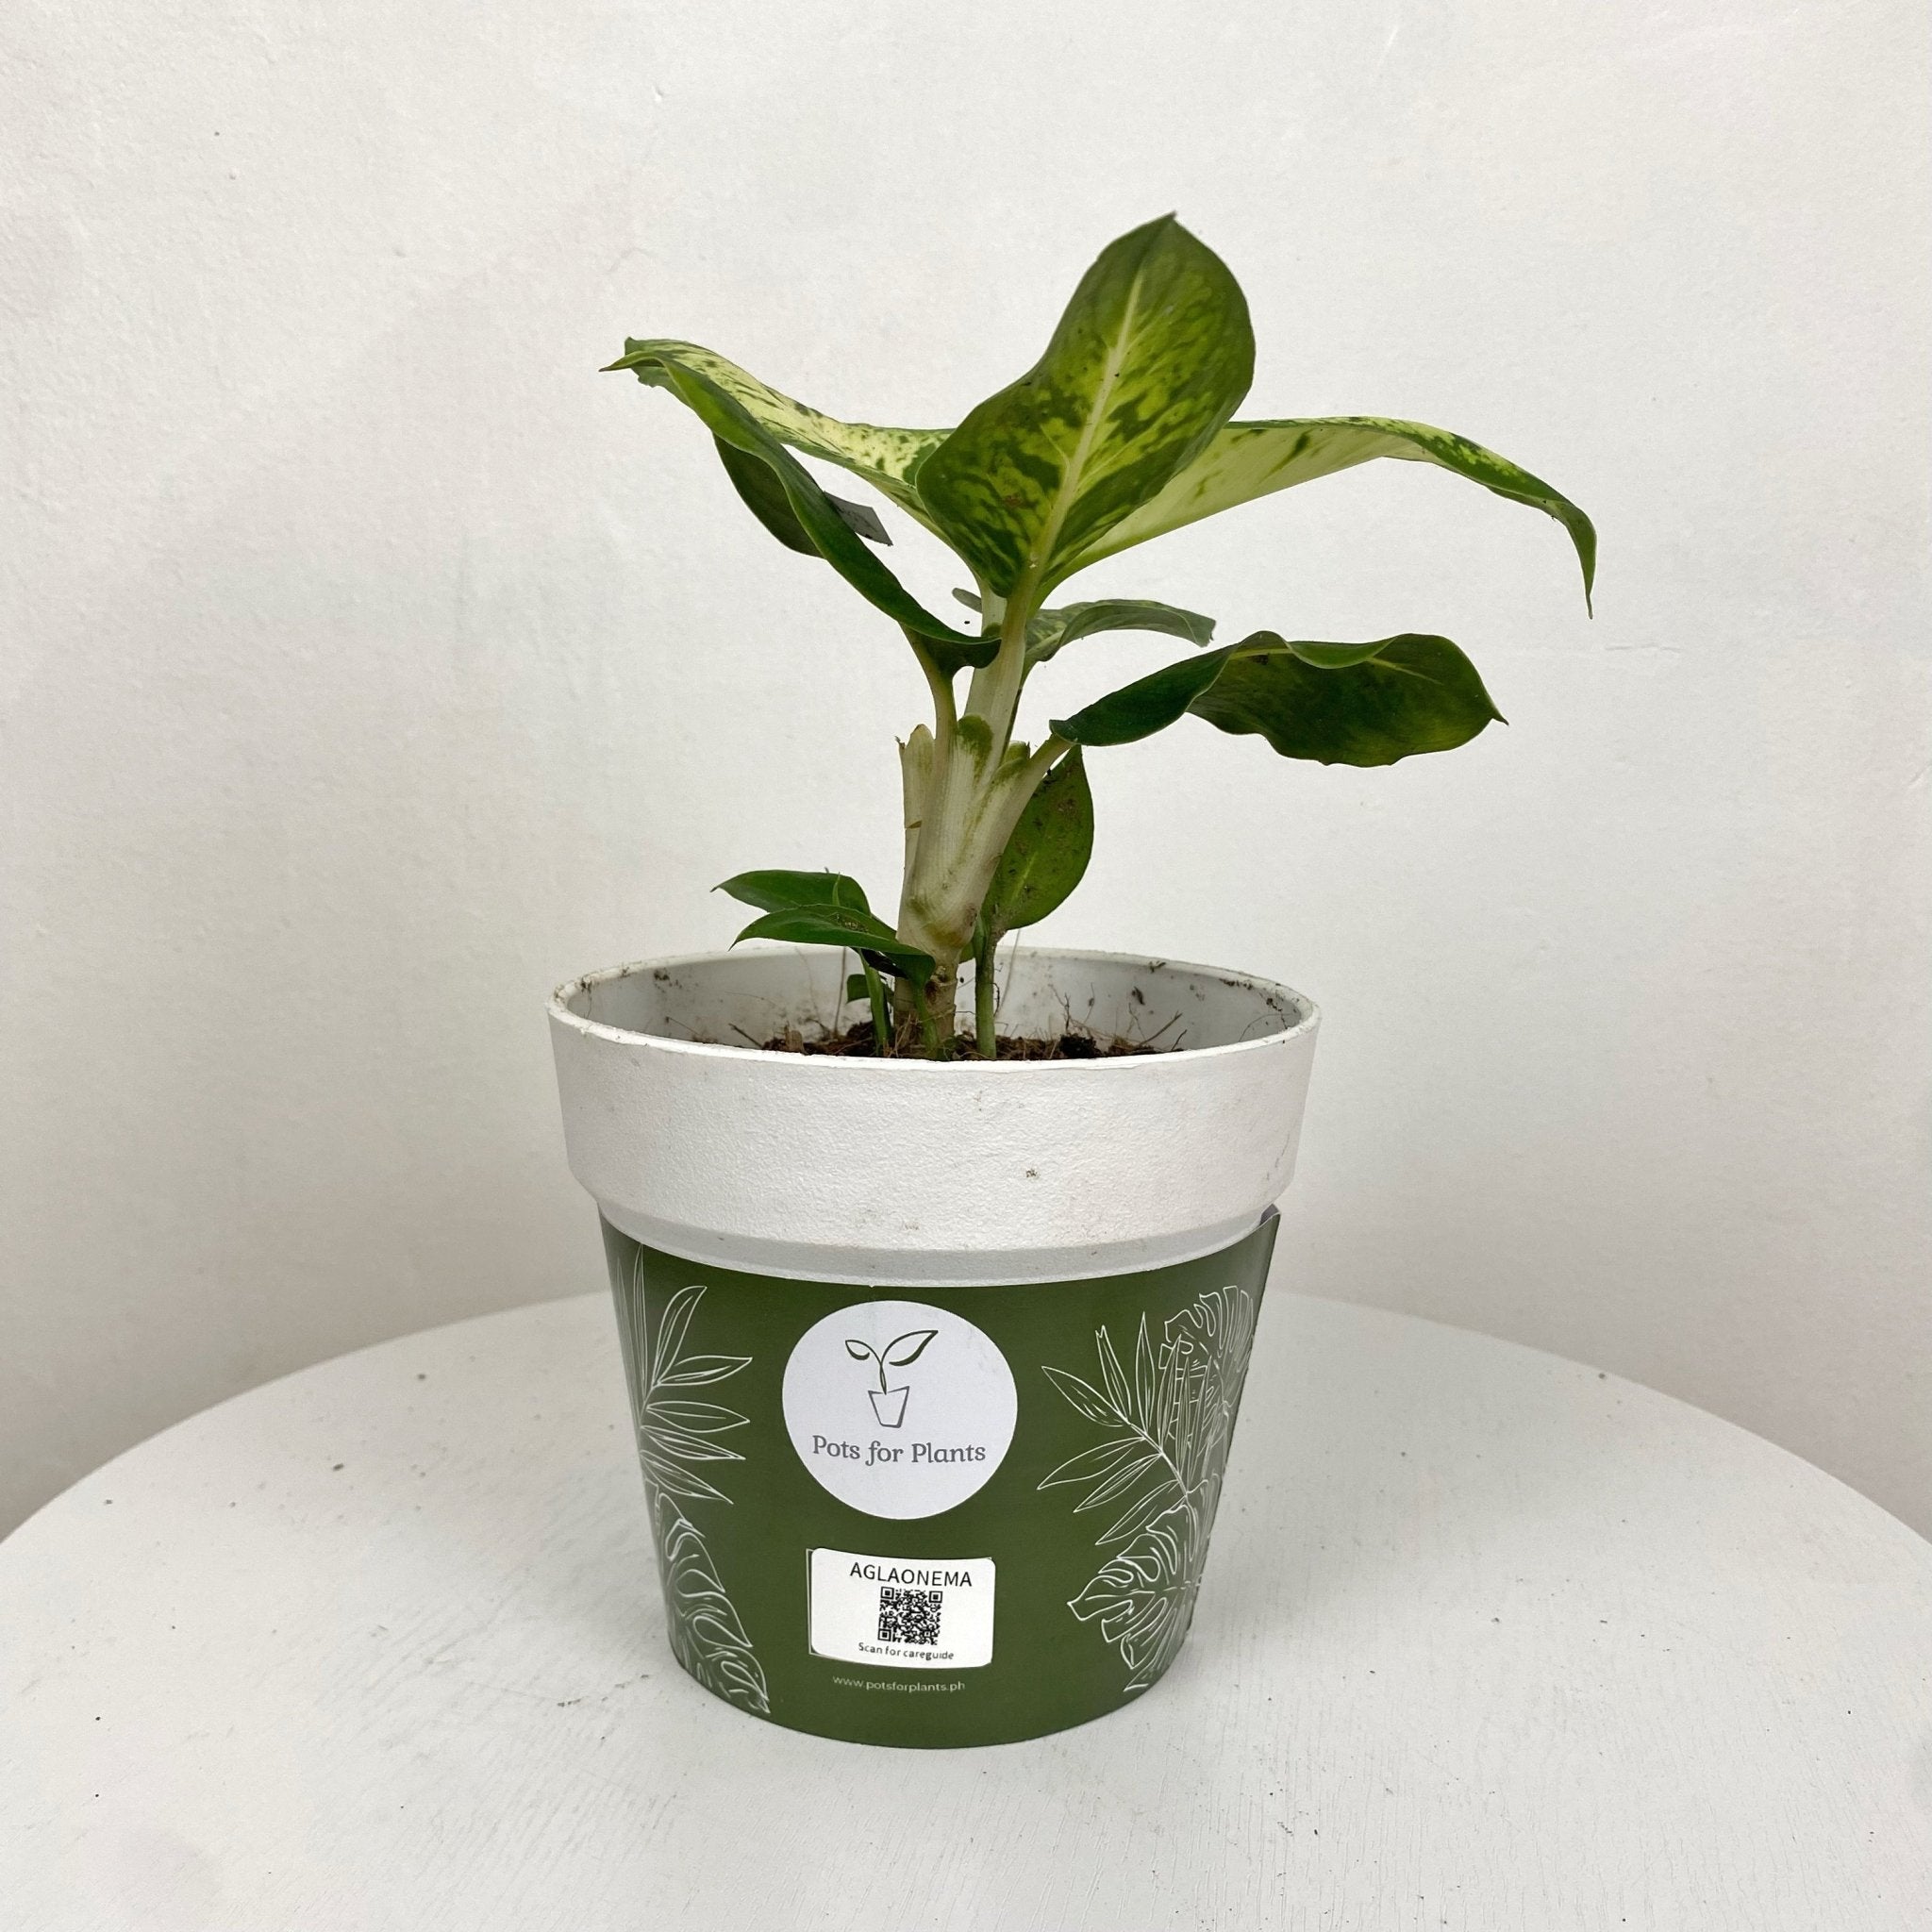 Aglaonema Rubthong - Pots For Plants